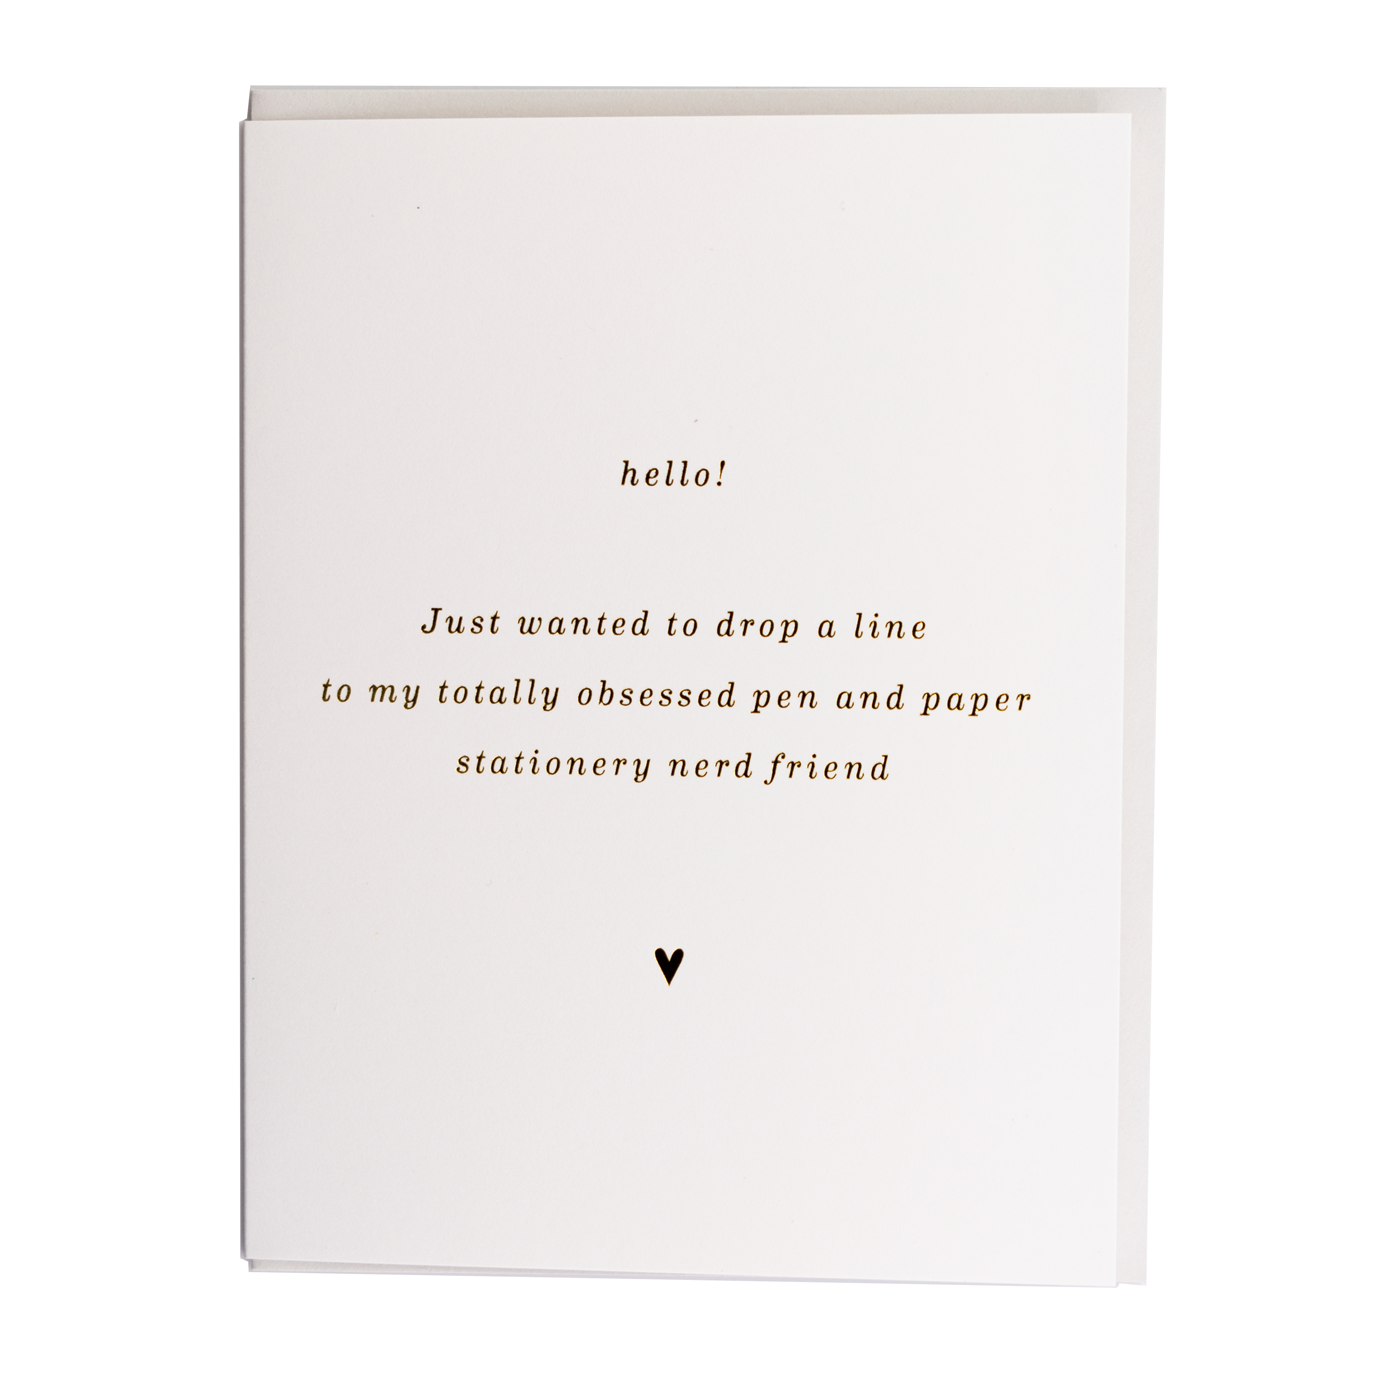 Smitten On Paper - Greeting Card - Nerdy Stationery Friend